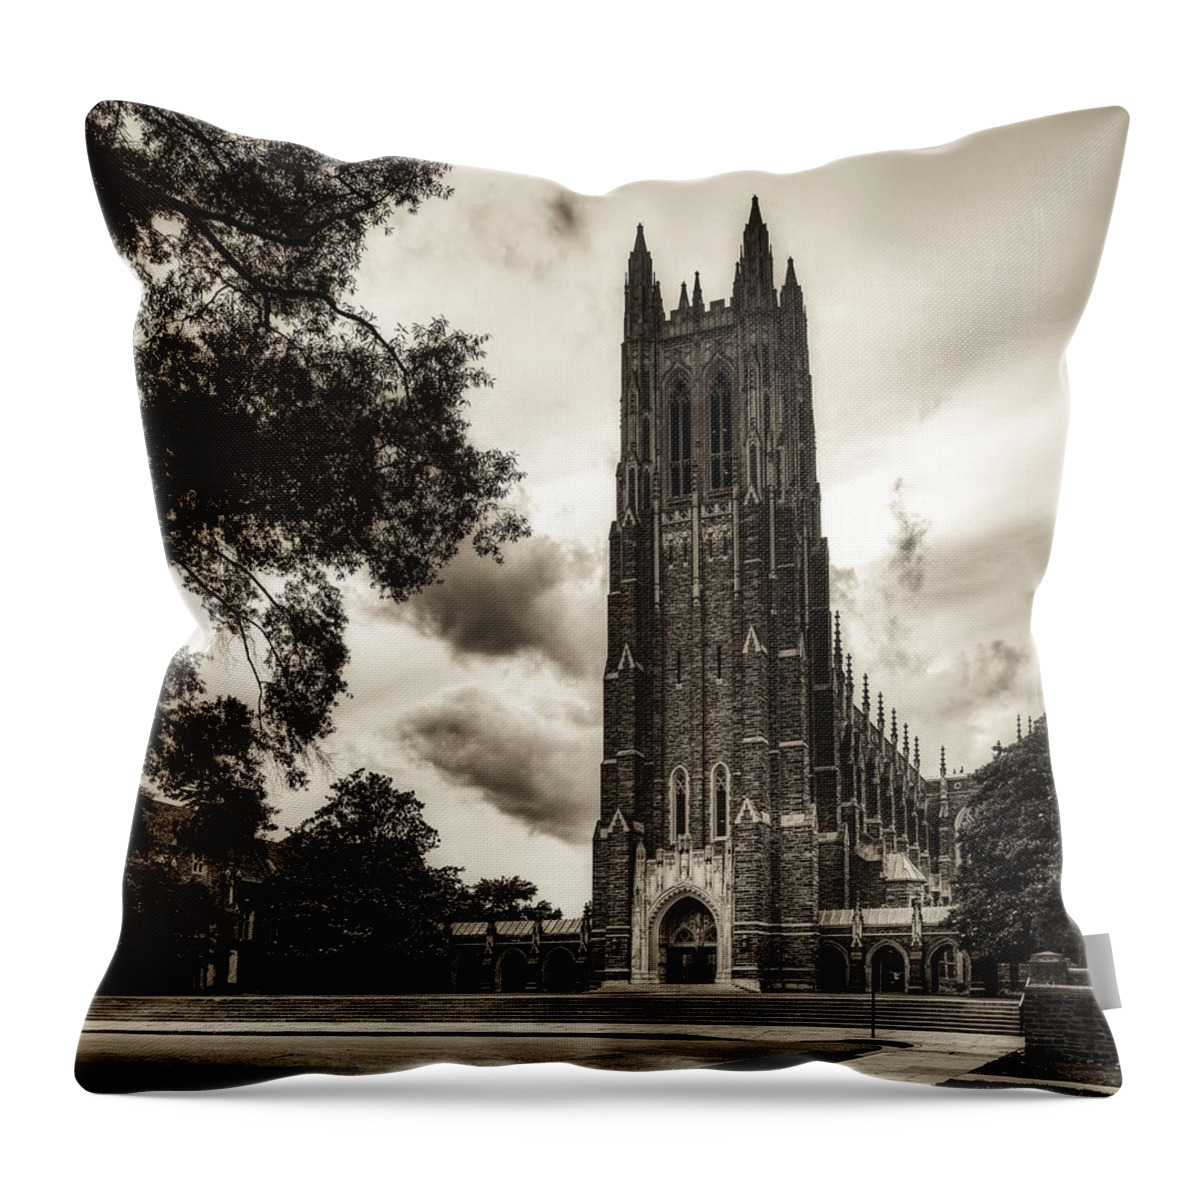 Duke University Throw Pillow featuring the photograph The Duke University Chapel #2 by Mountain Dreams